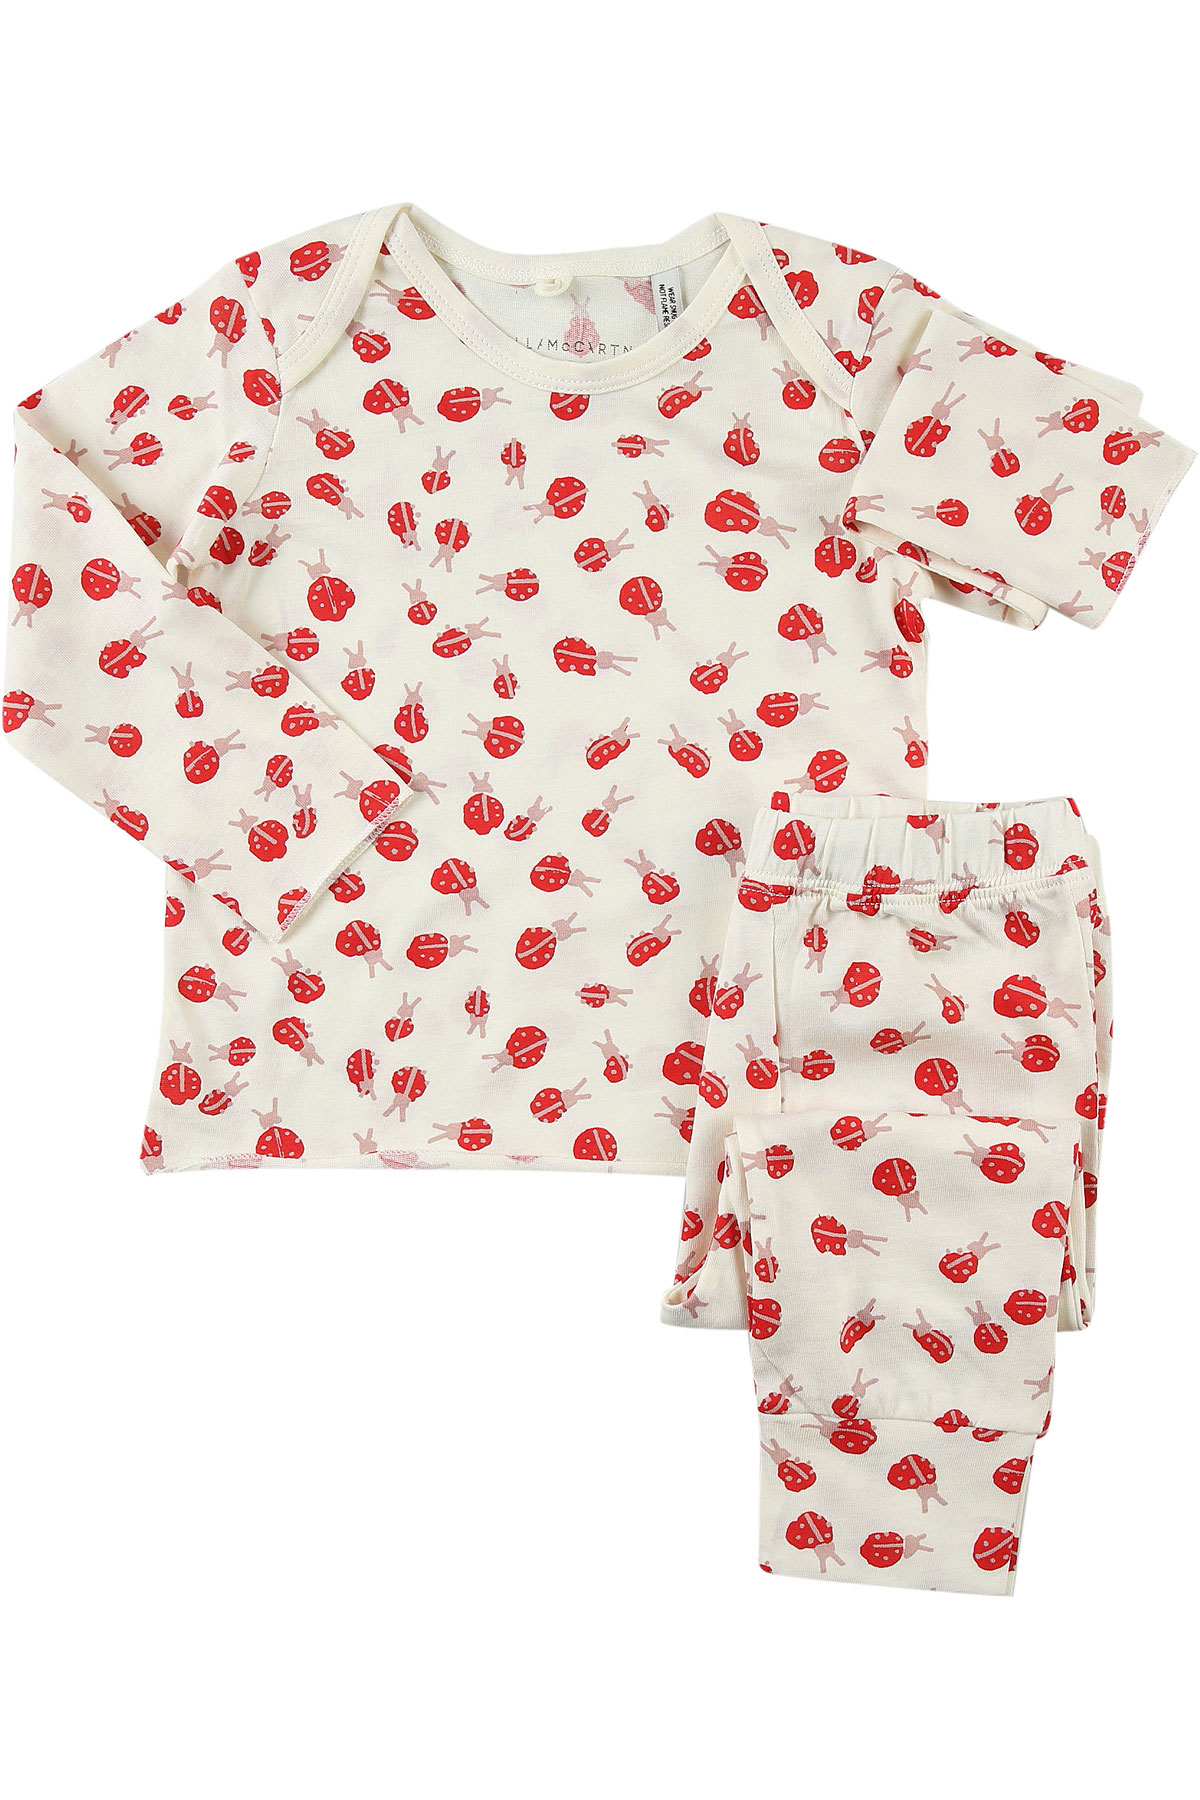 Baby Girl Clothing Stella McCartney, Style code: 520000-sljg6-9087